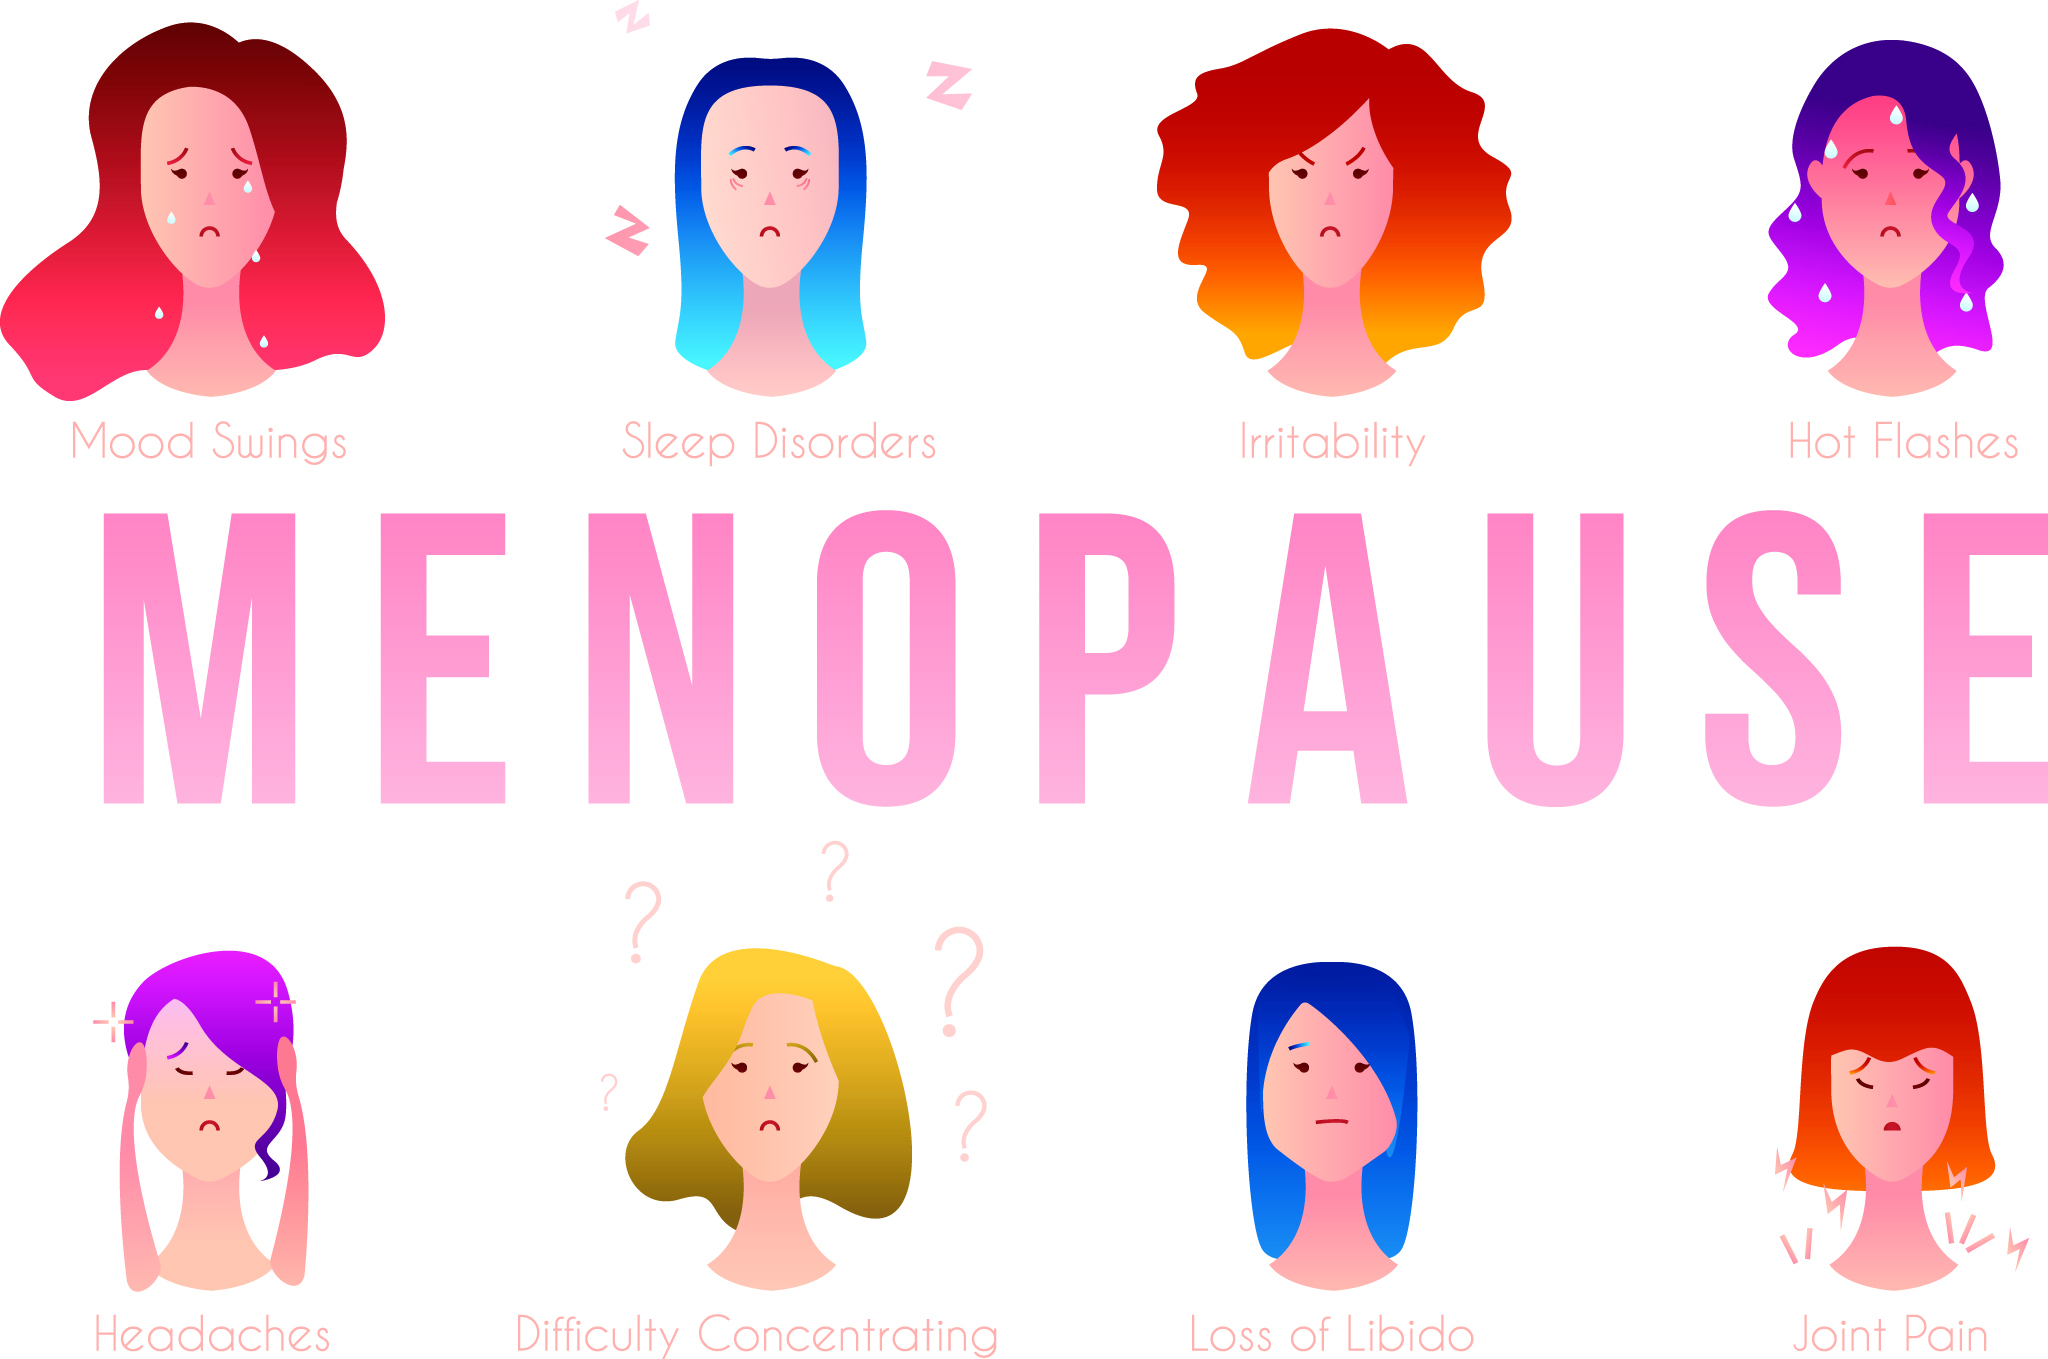 Does Menopause Cause Nausea? [+ Remedies] - Menopause Better